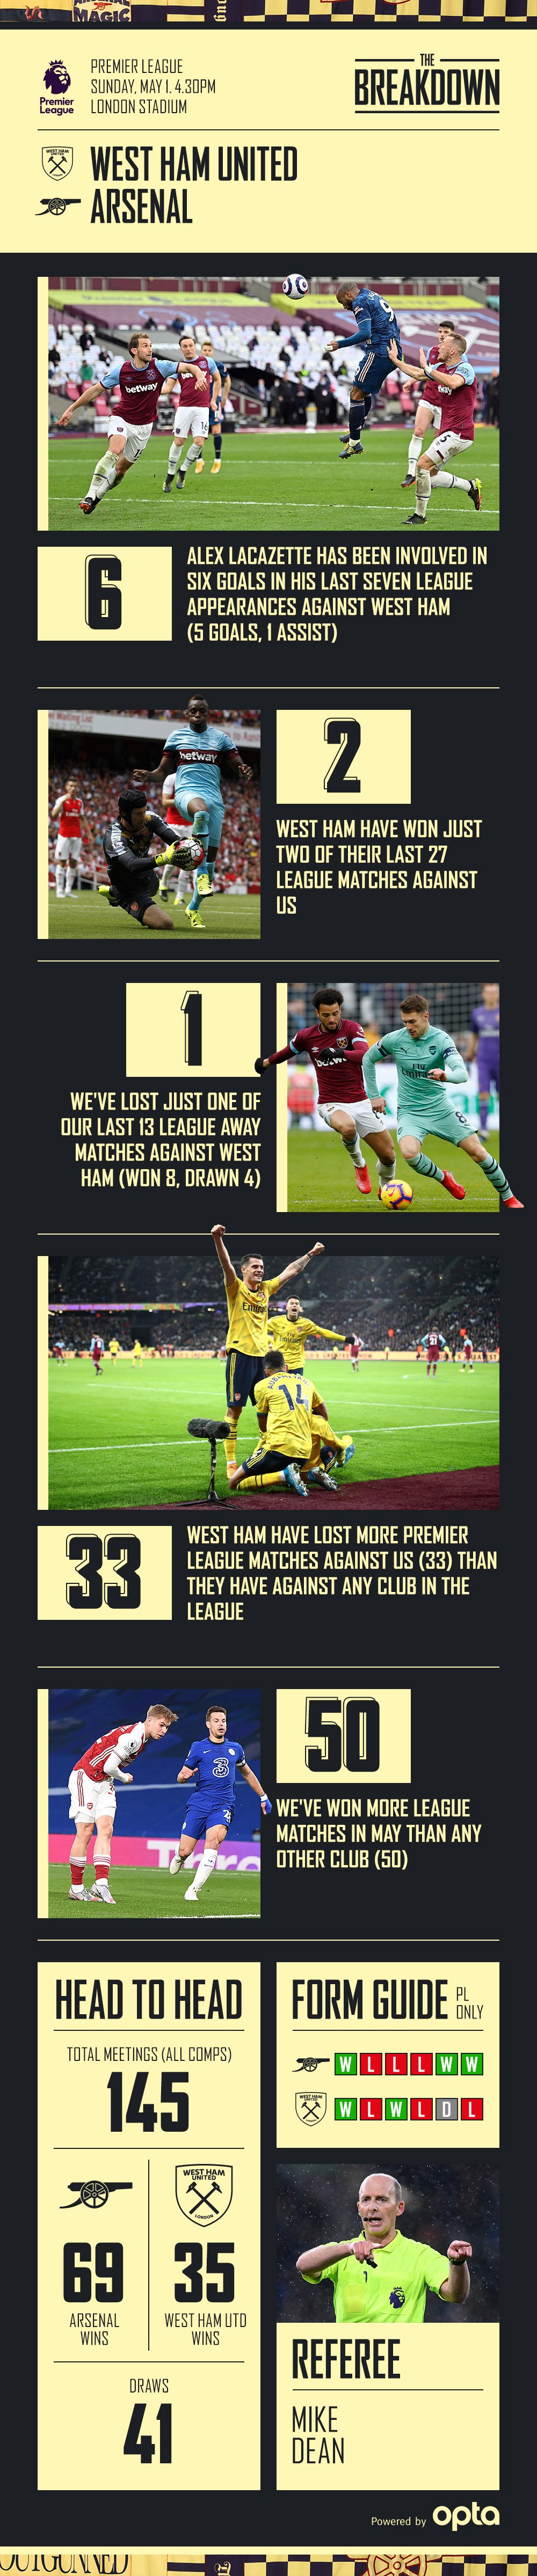 West Ham United vs Arsenal Breakdown